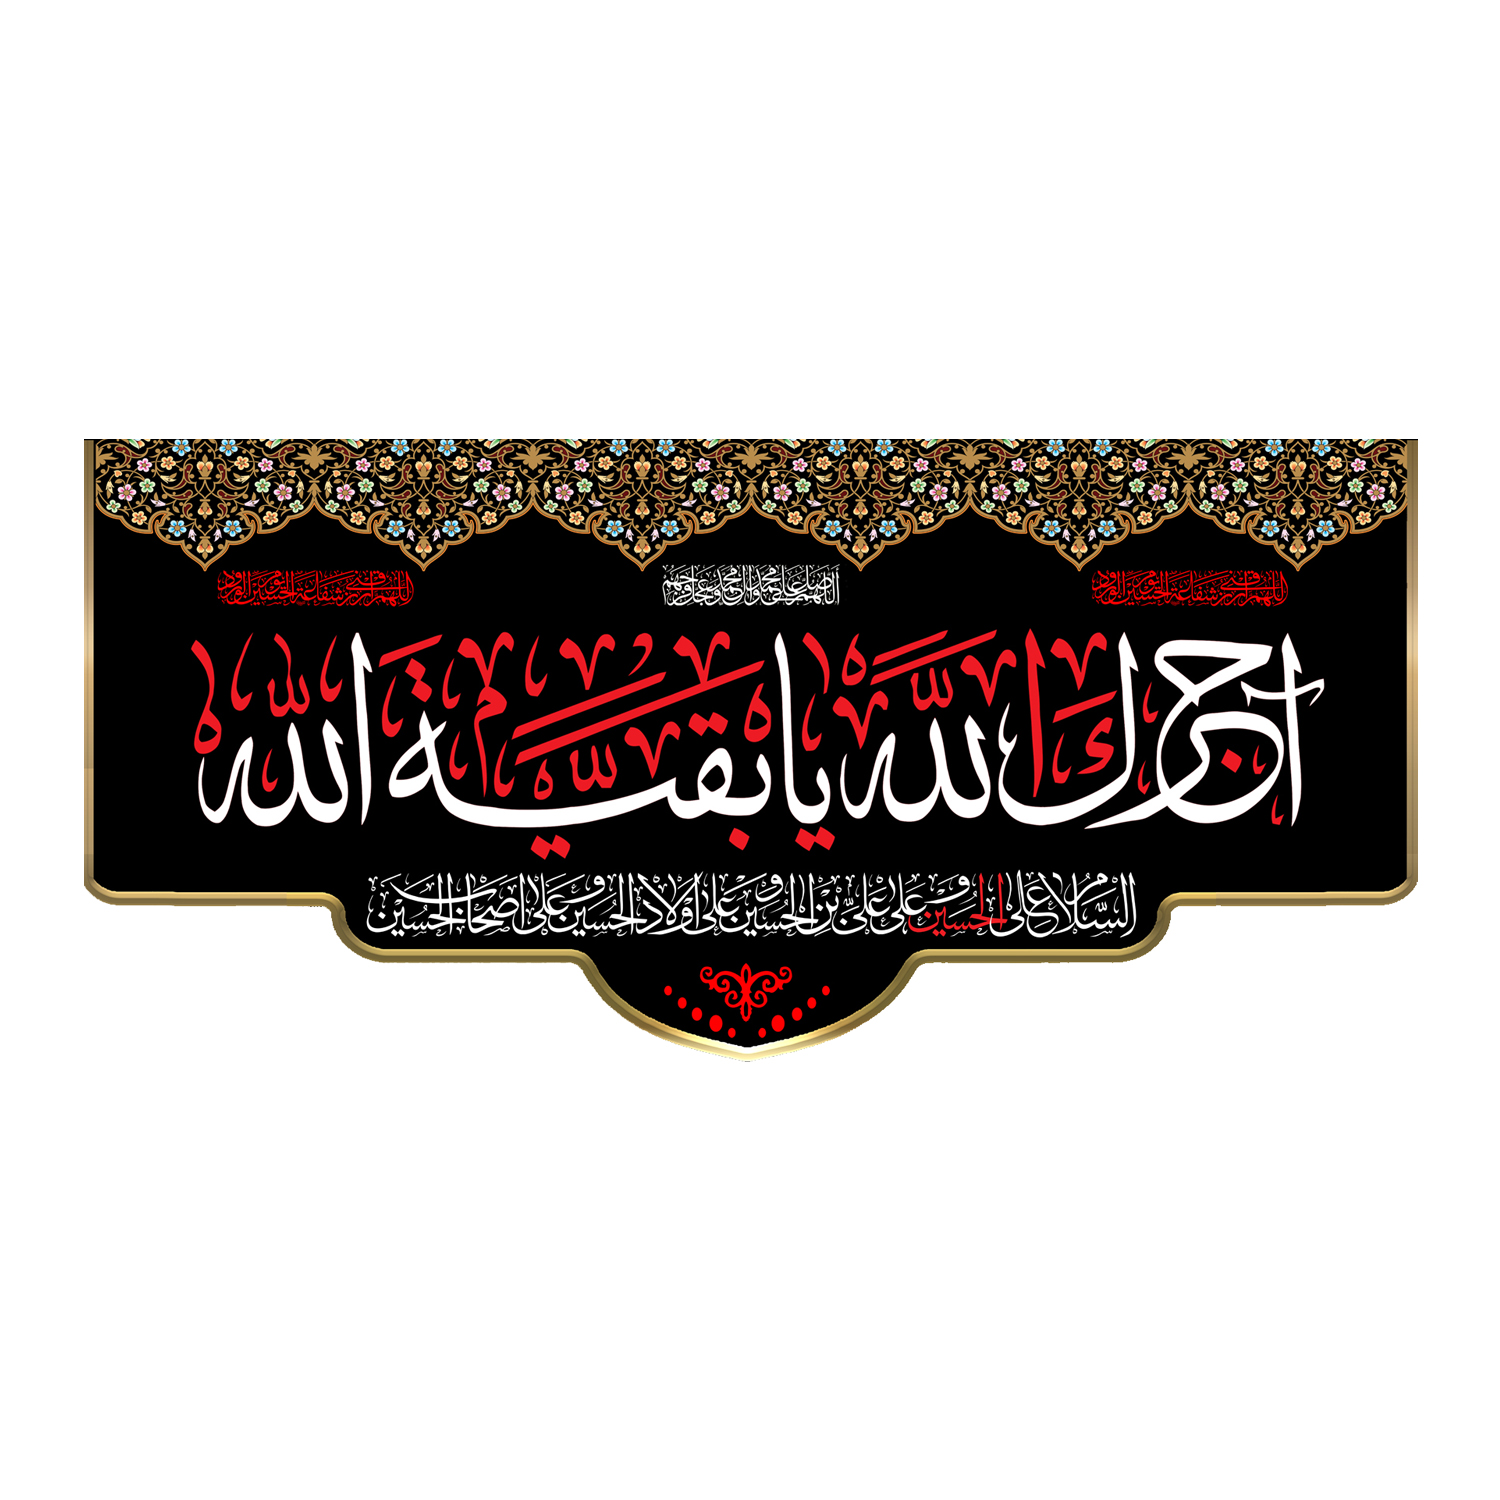 پرچم مدل آجرک الله یا صاحب الزمان کد 500079-140300